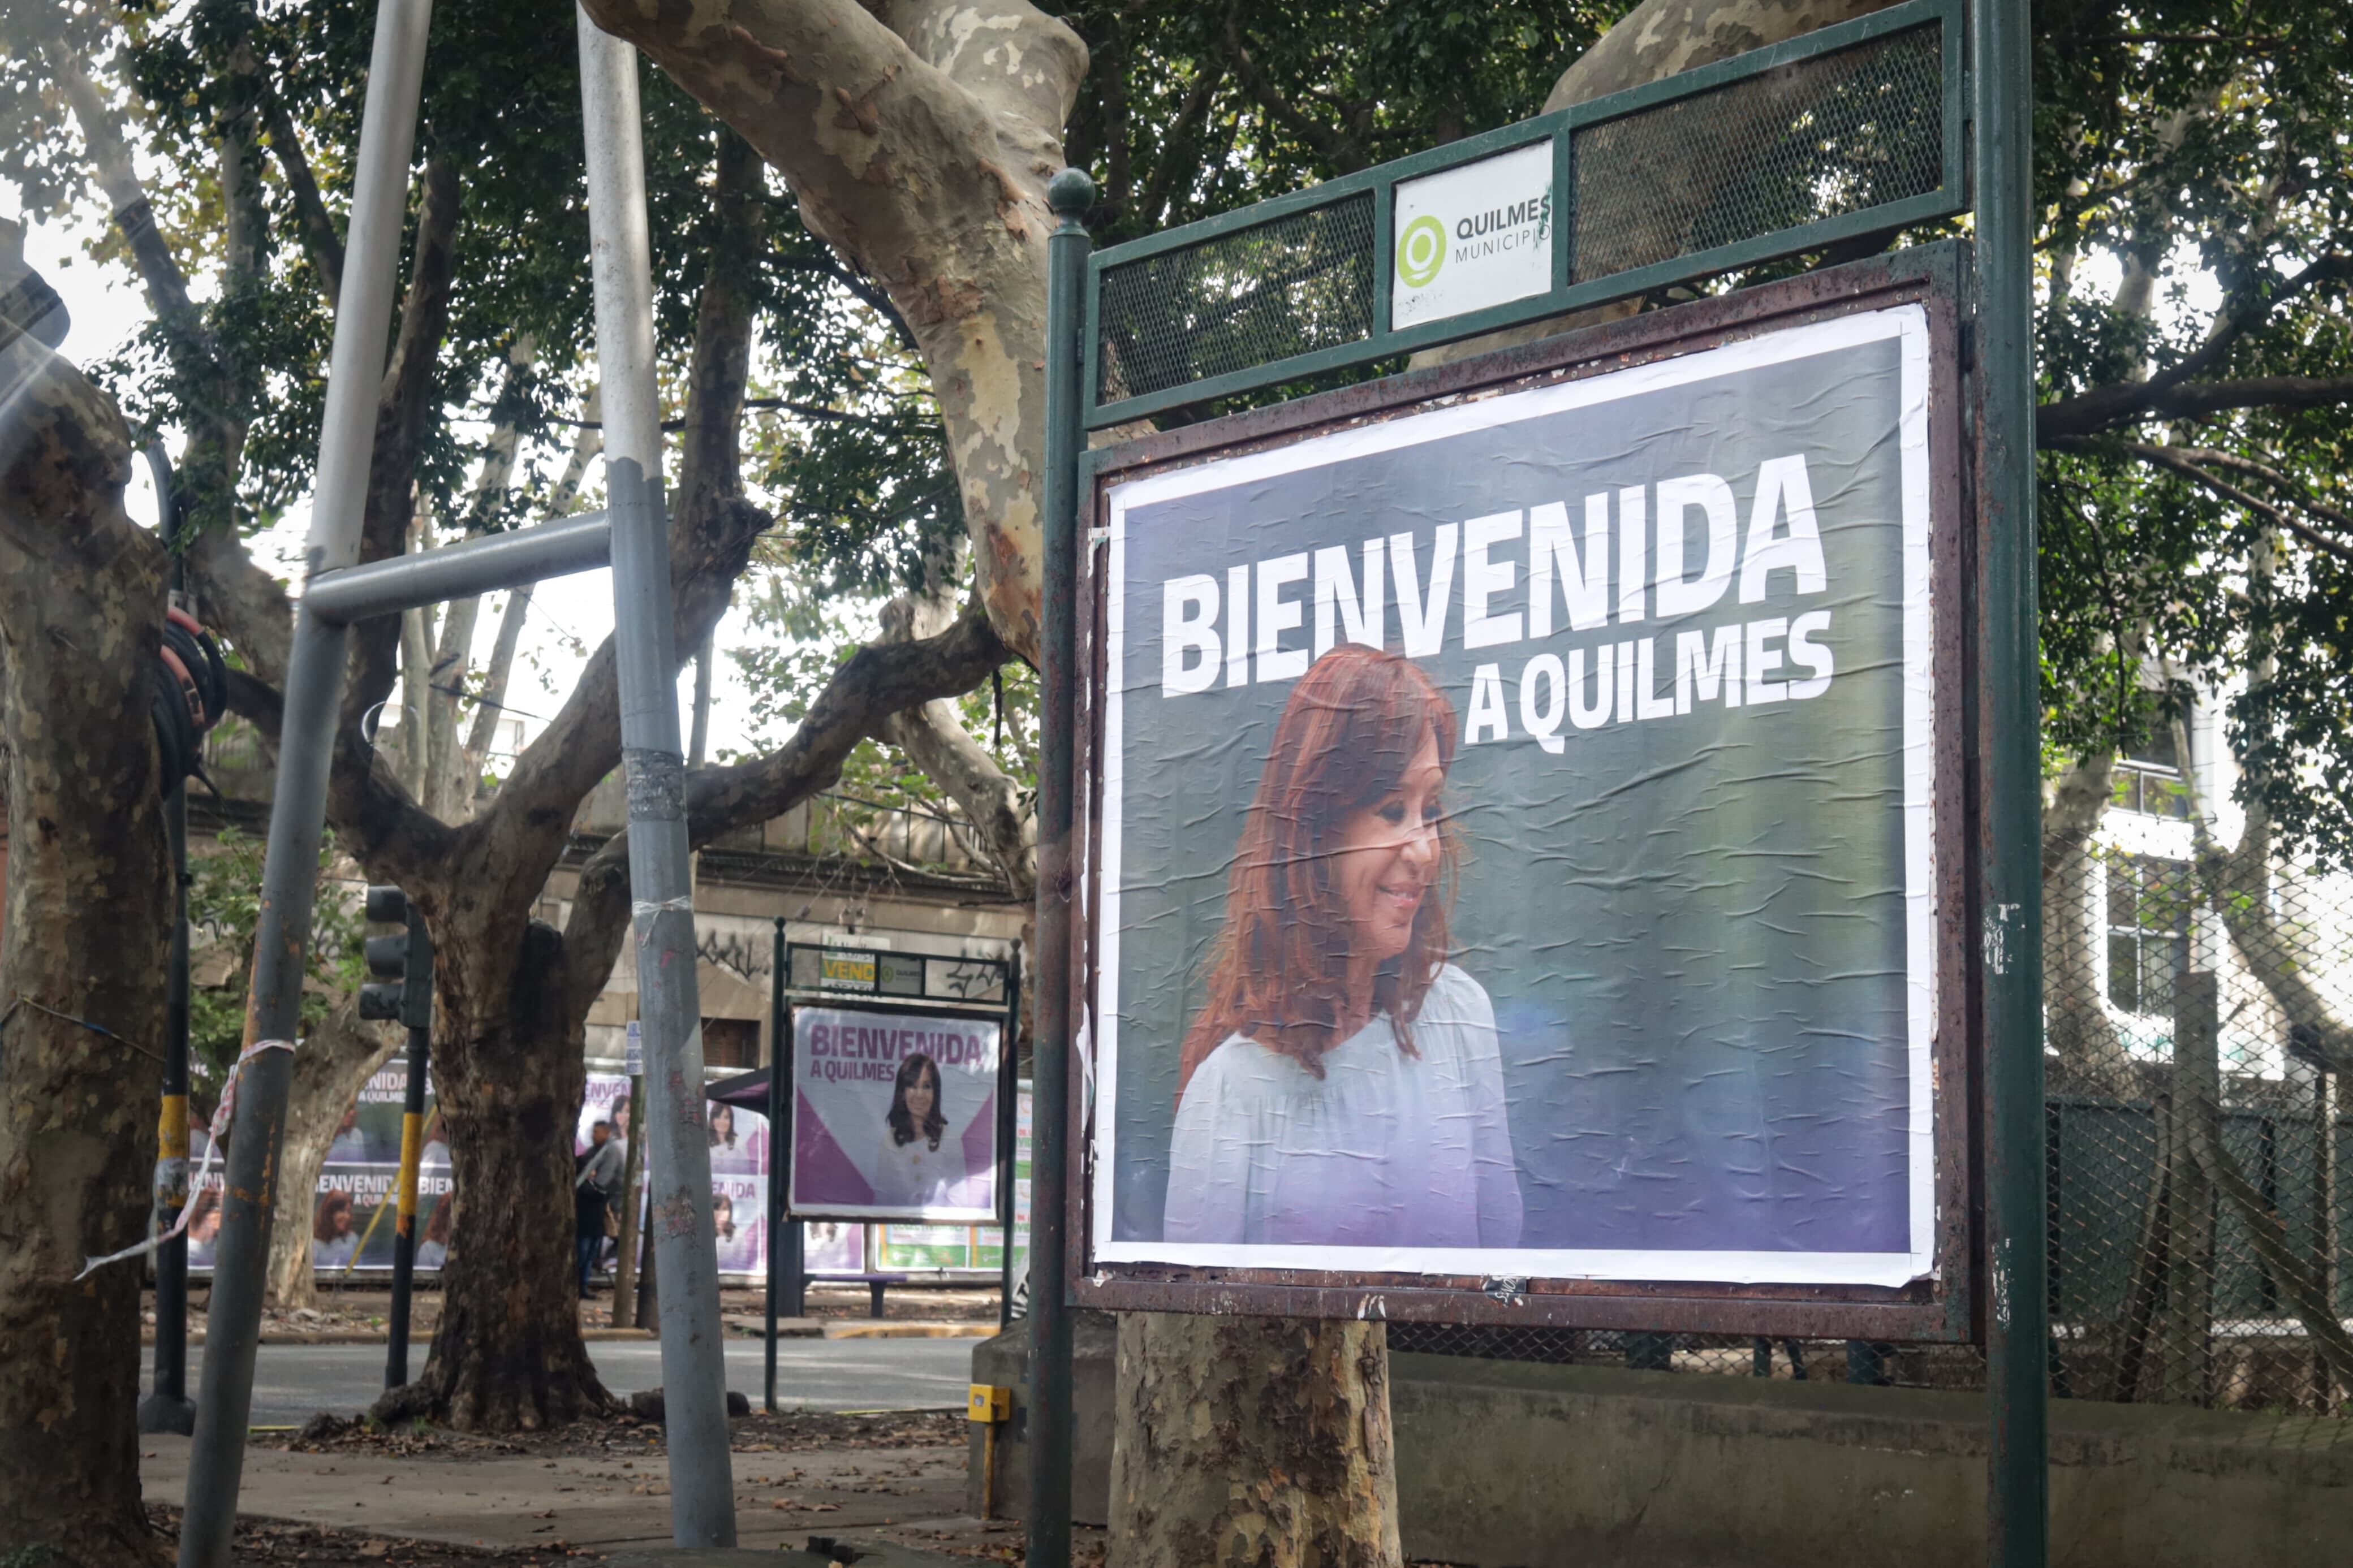 Cristina Kirchner habla en Quilmes, en vivo